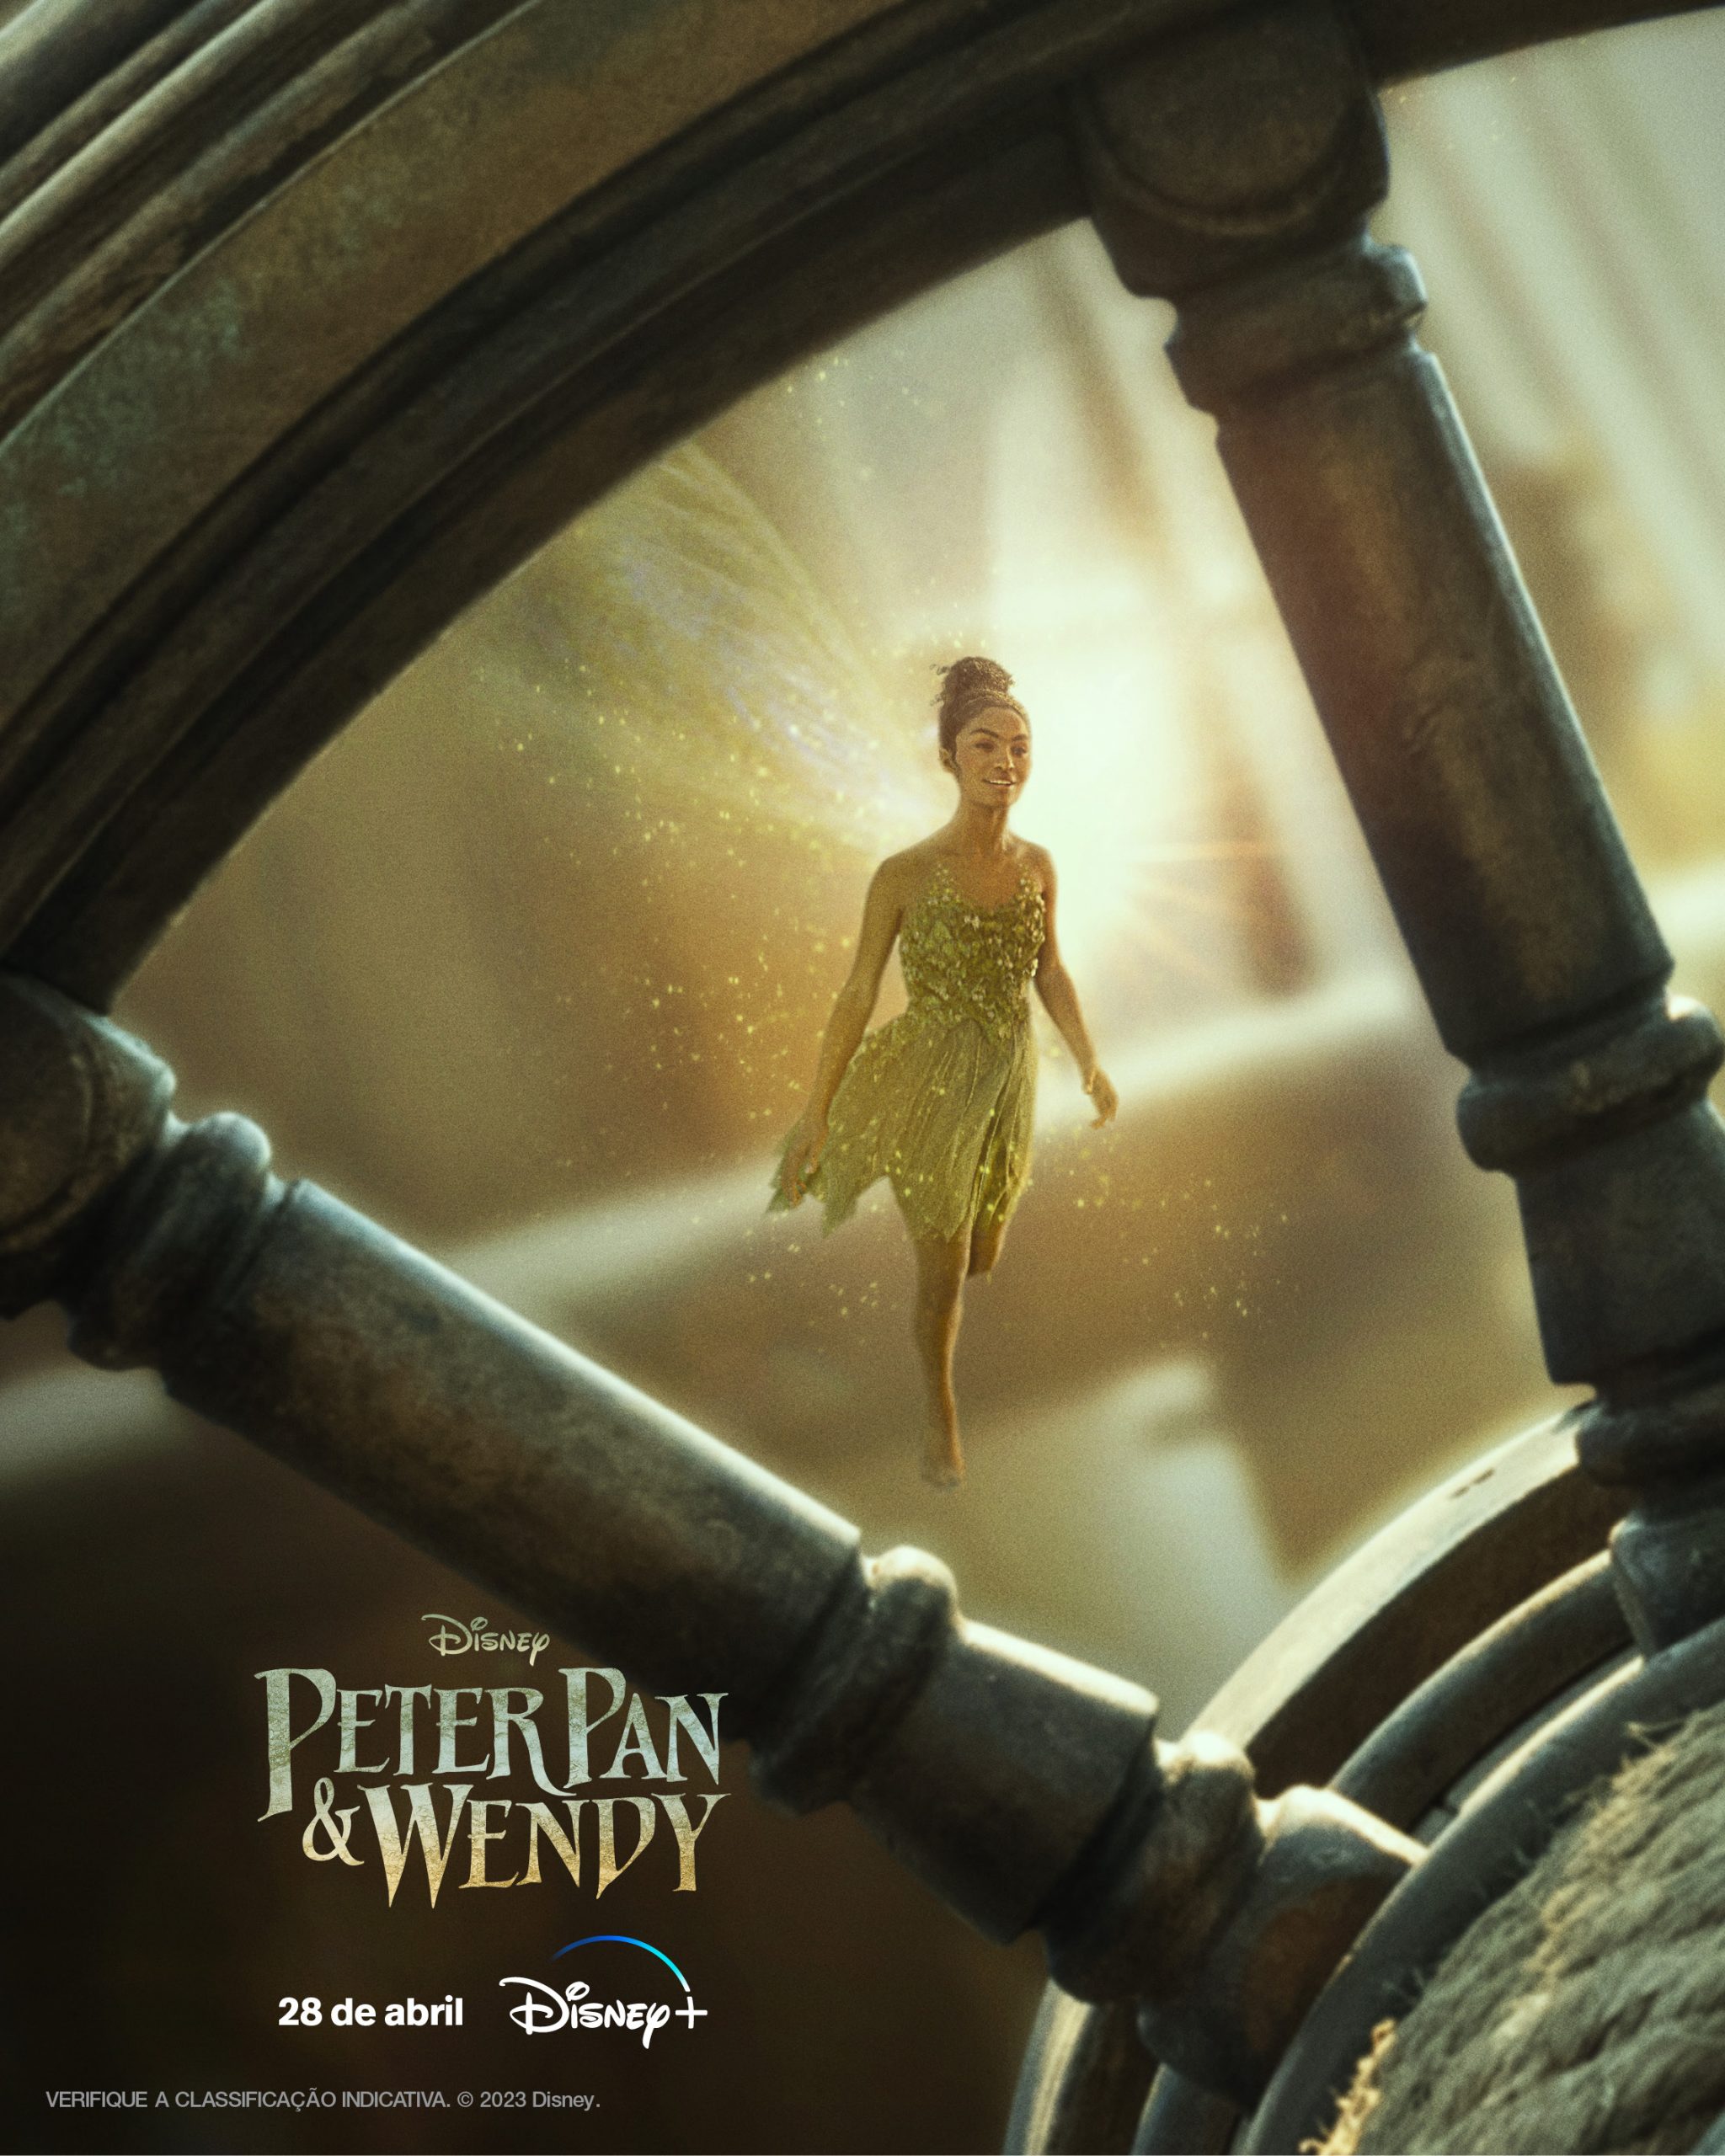 Disney+ divulga 15 pôsteres de "Peter Pan & Wendy"